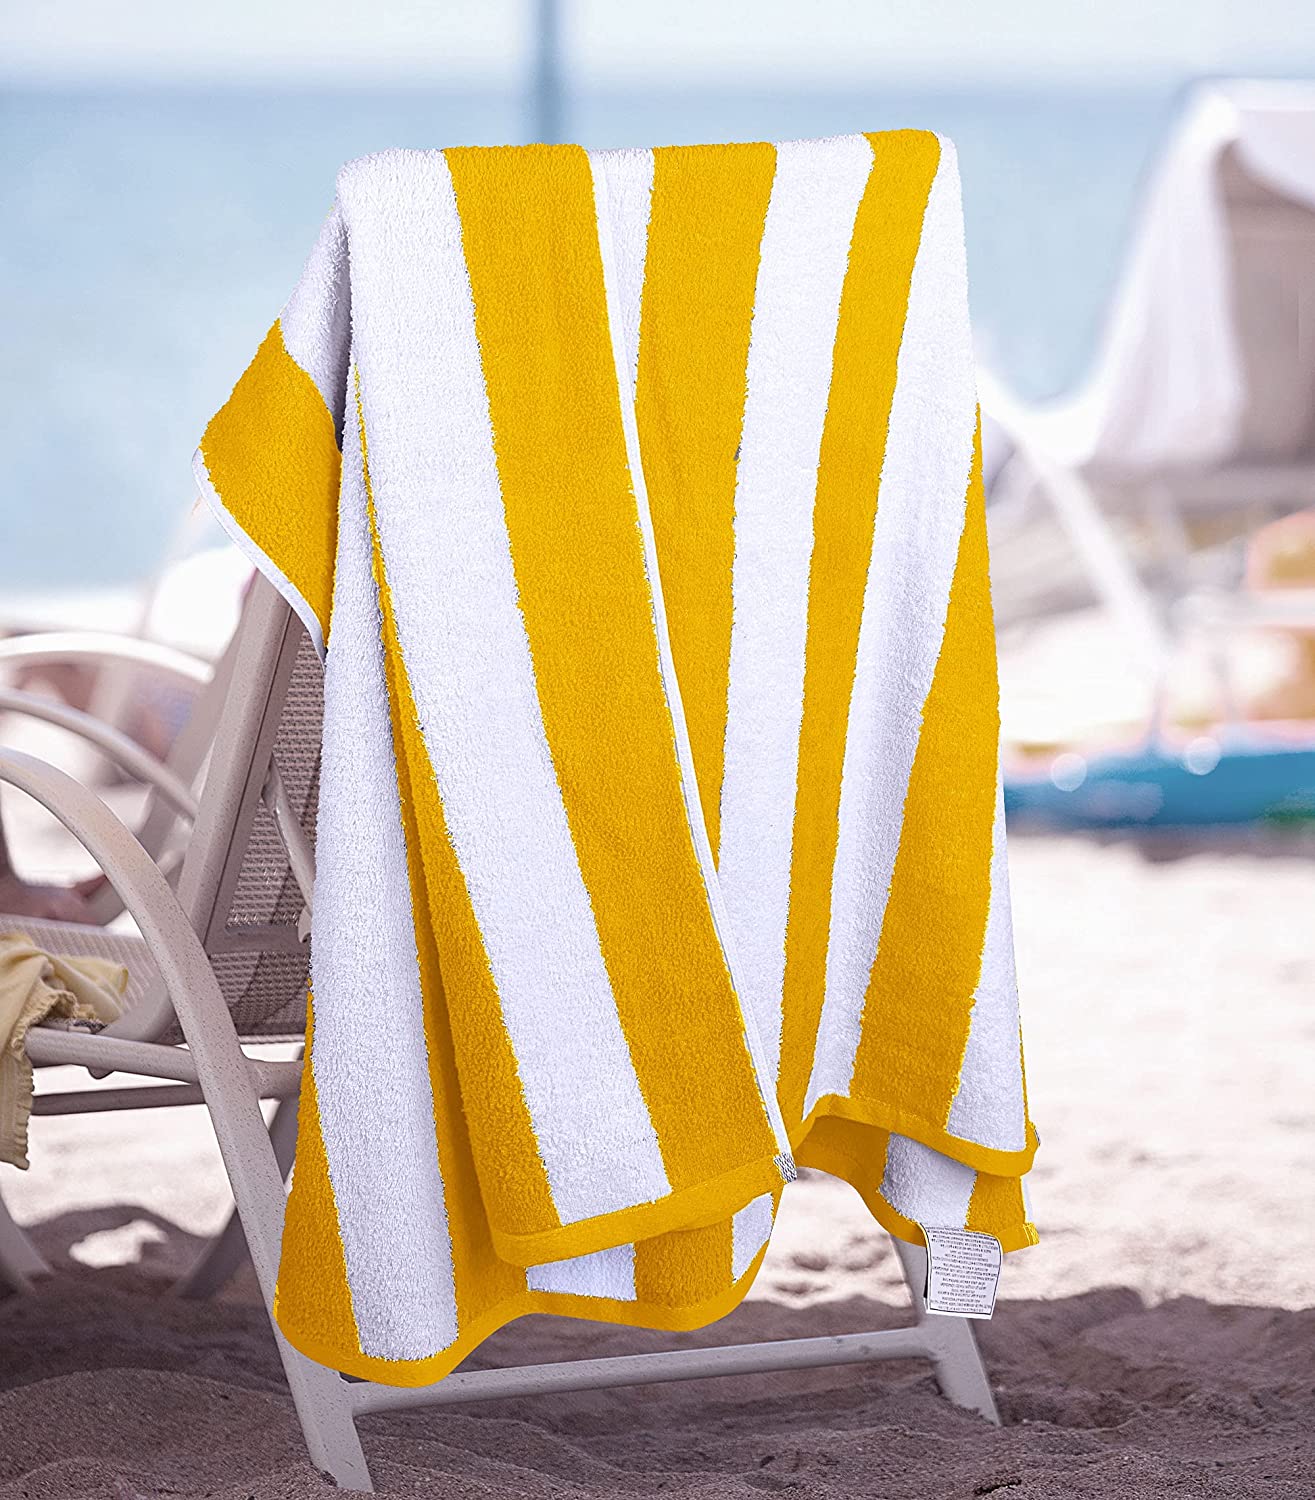 Registry Cabana Stripe Pool Towel, 30 x 60